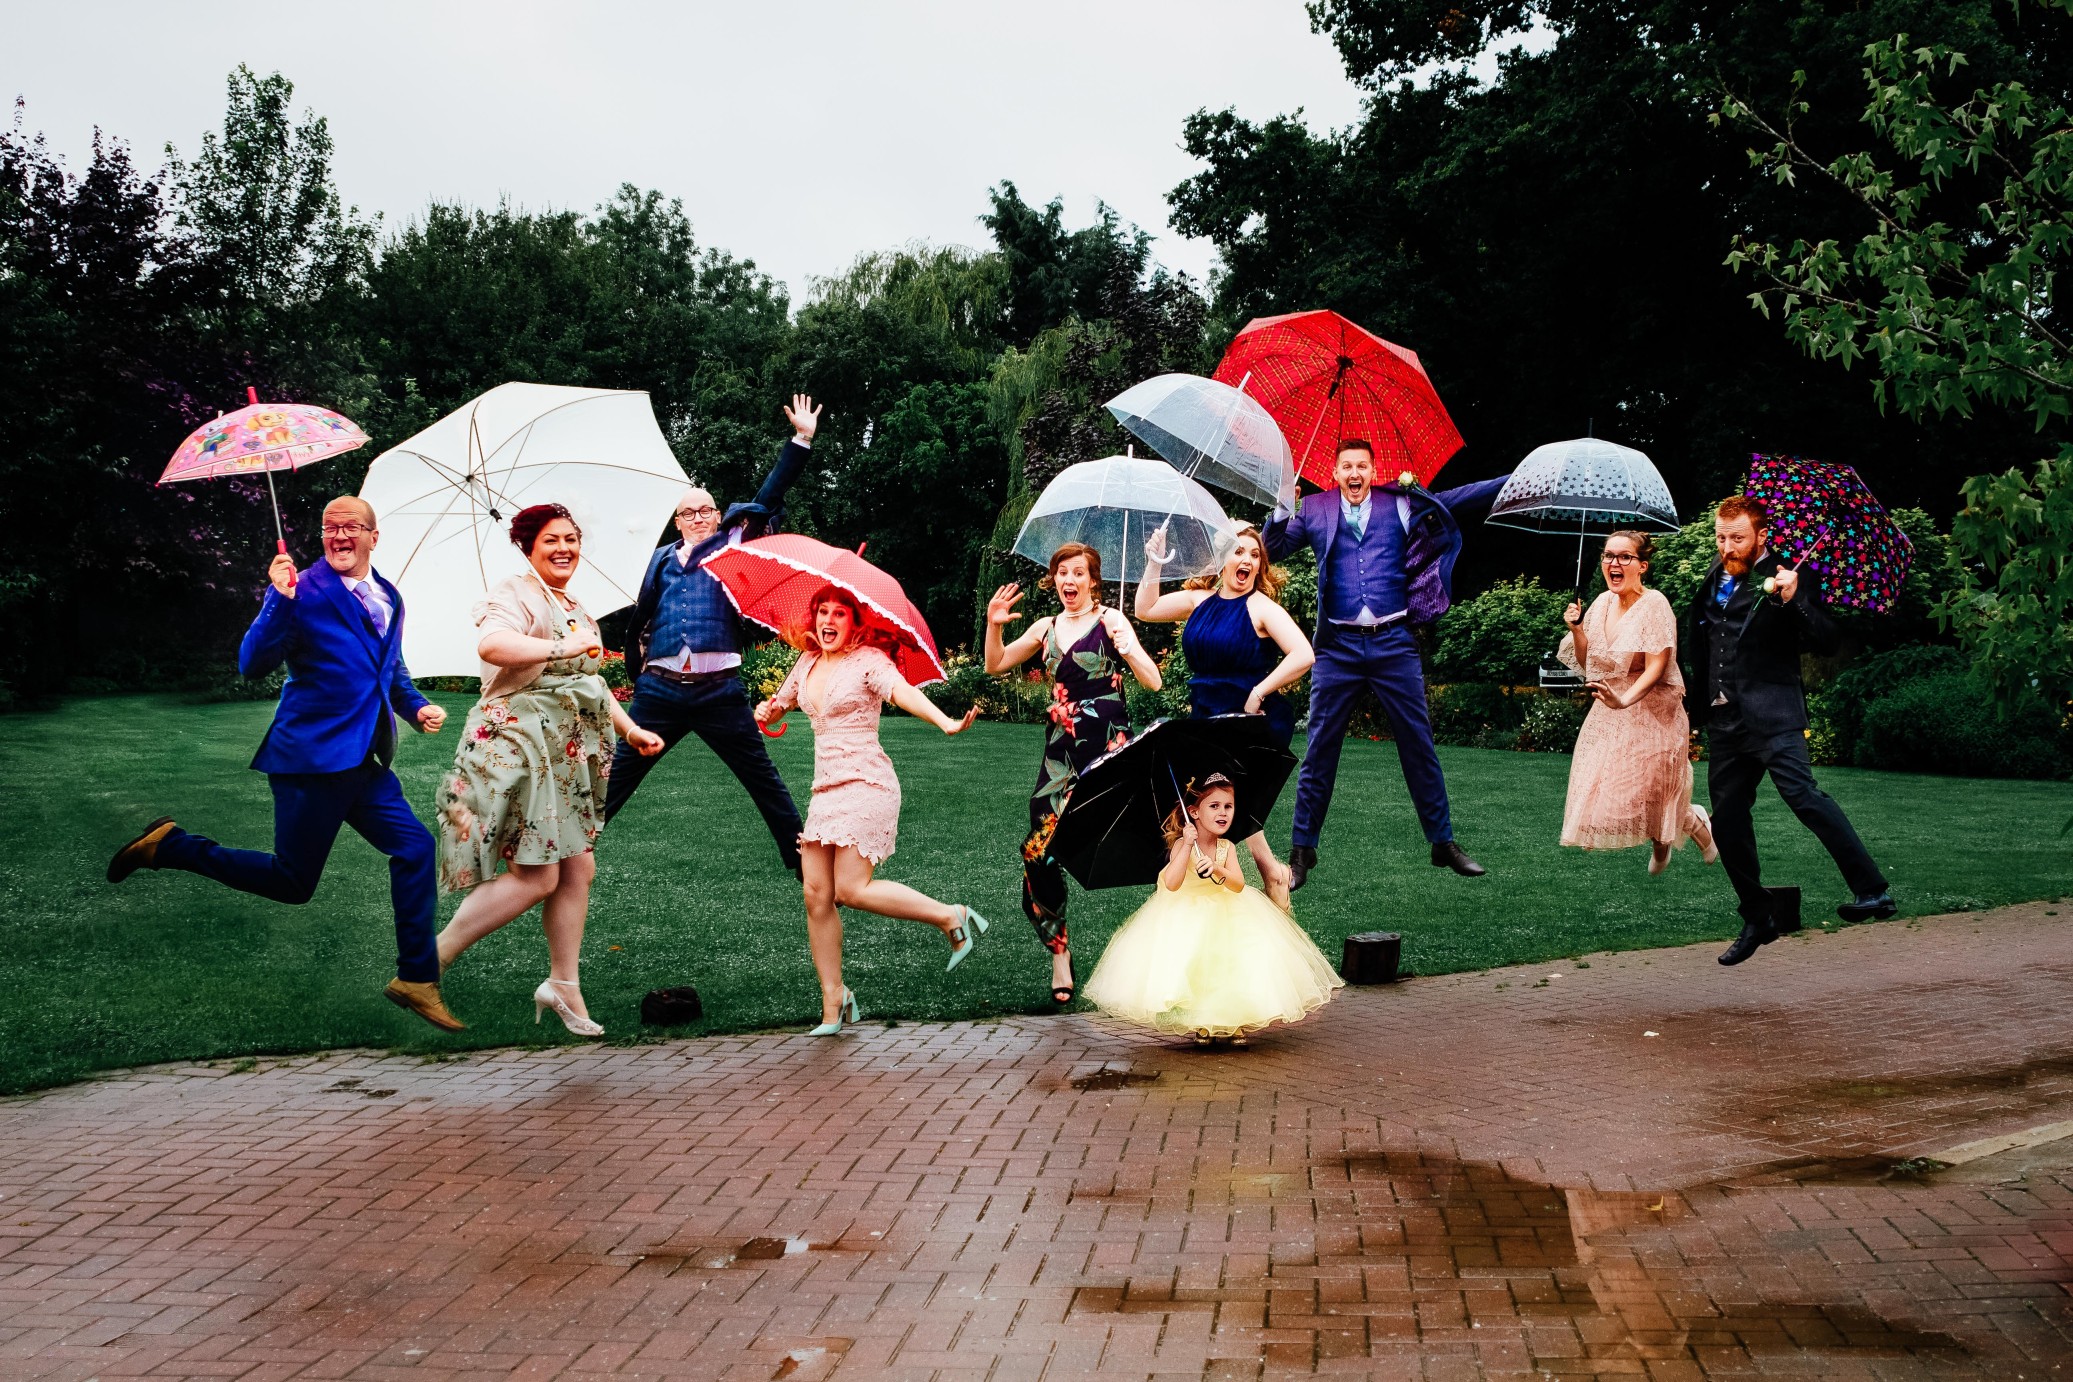 rainy wedding - rain wedding advice - fun wedding planning - wedding planning blog - rain wedding photos with umbrellas